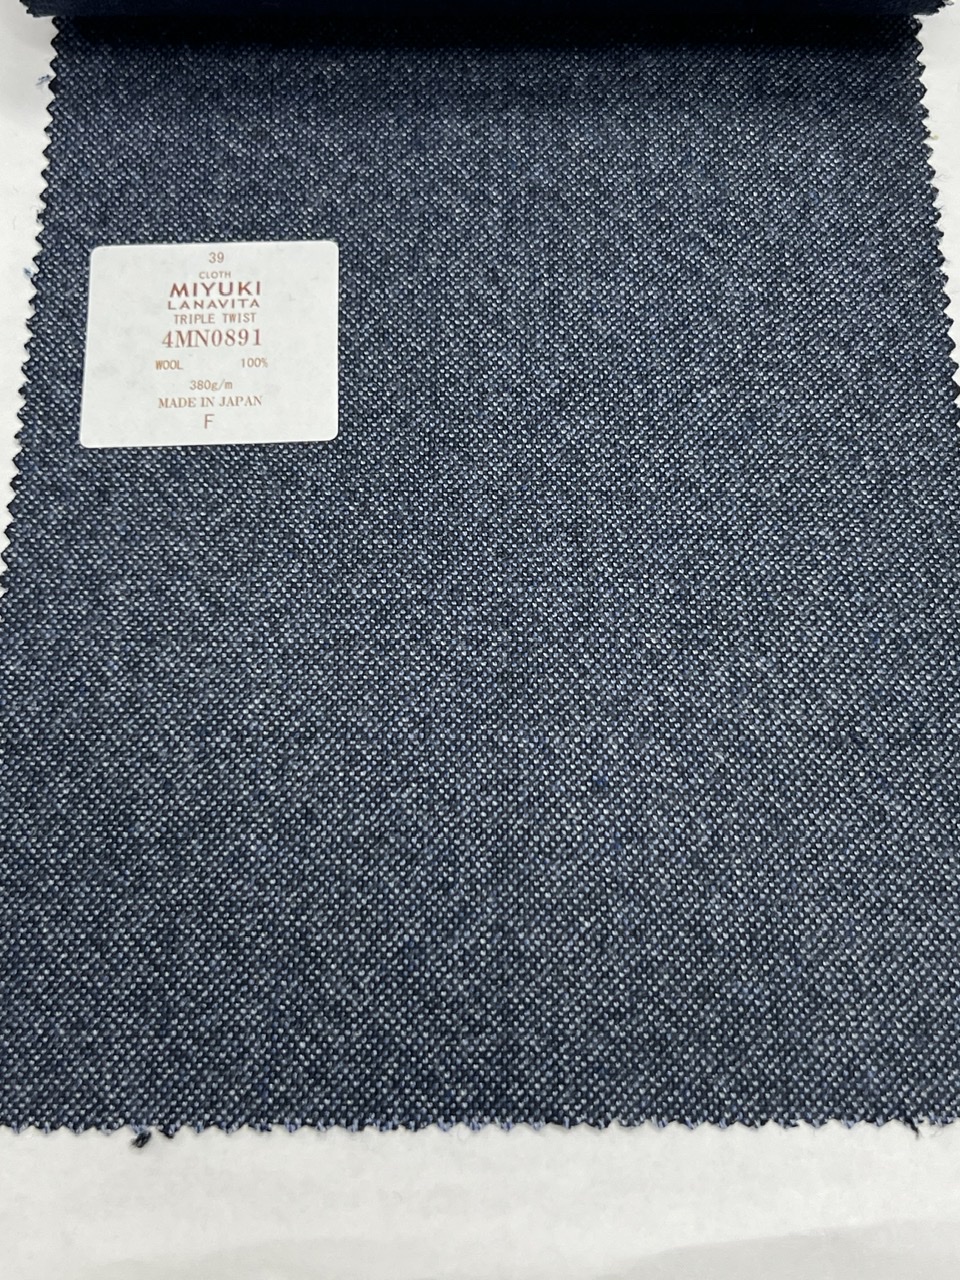 4MN0891 LIGNE CONFORT LANAVITA TRIPLE TWIST Bleu Moyen[Textile] Miyuki Keori (Miyuki)